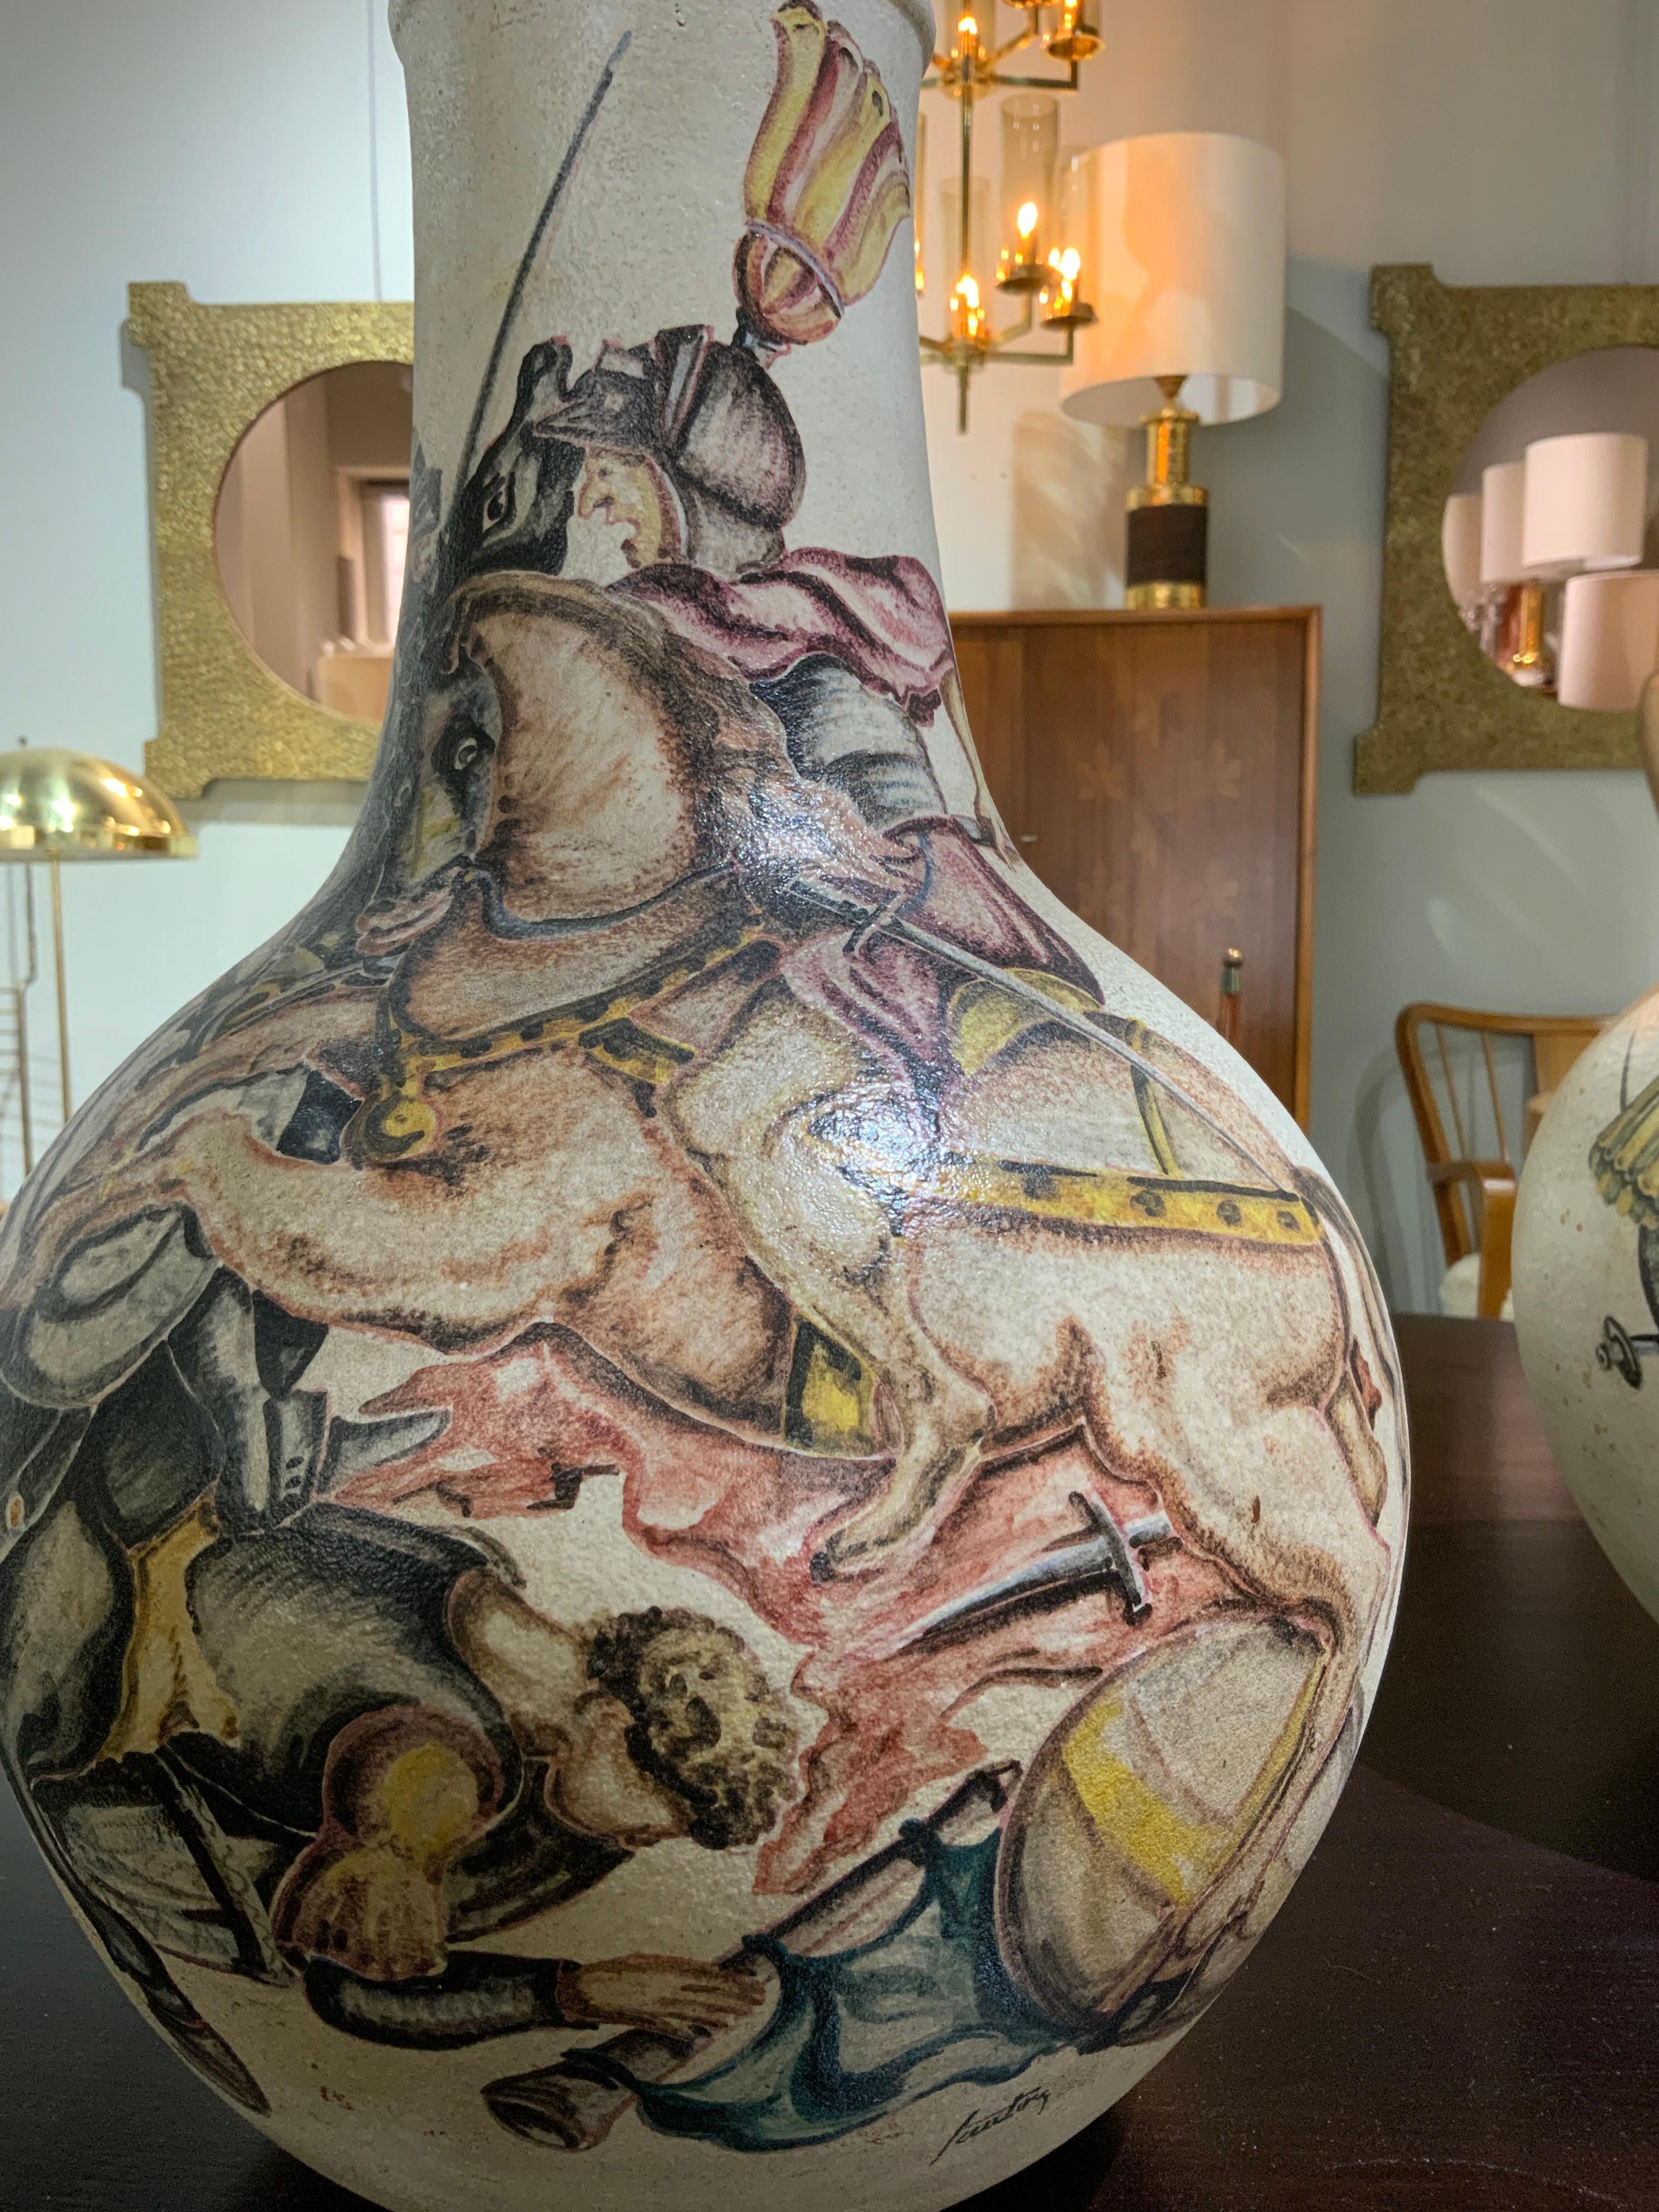  Marcello Fantoni Paar große Vasen mit Schlachtszenen 
Bemalte Keramik 
Unterschrift des Autors 